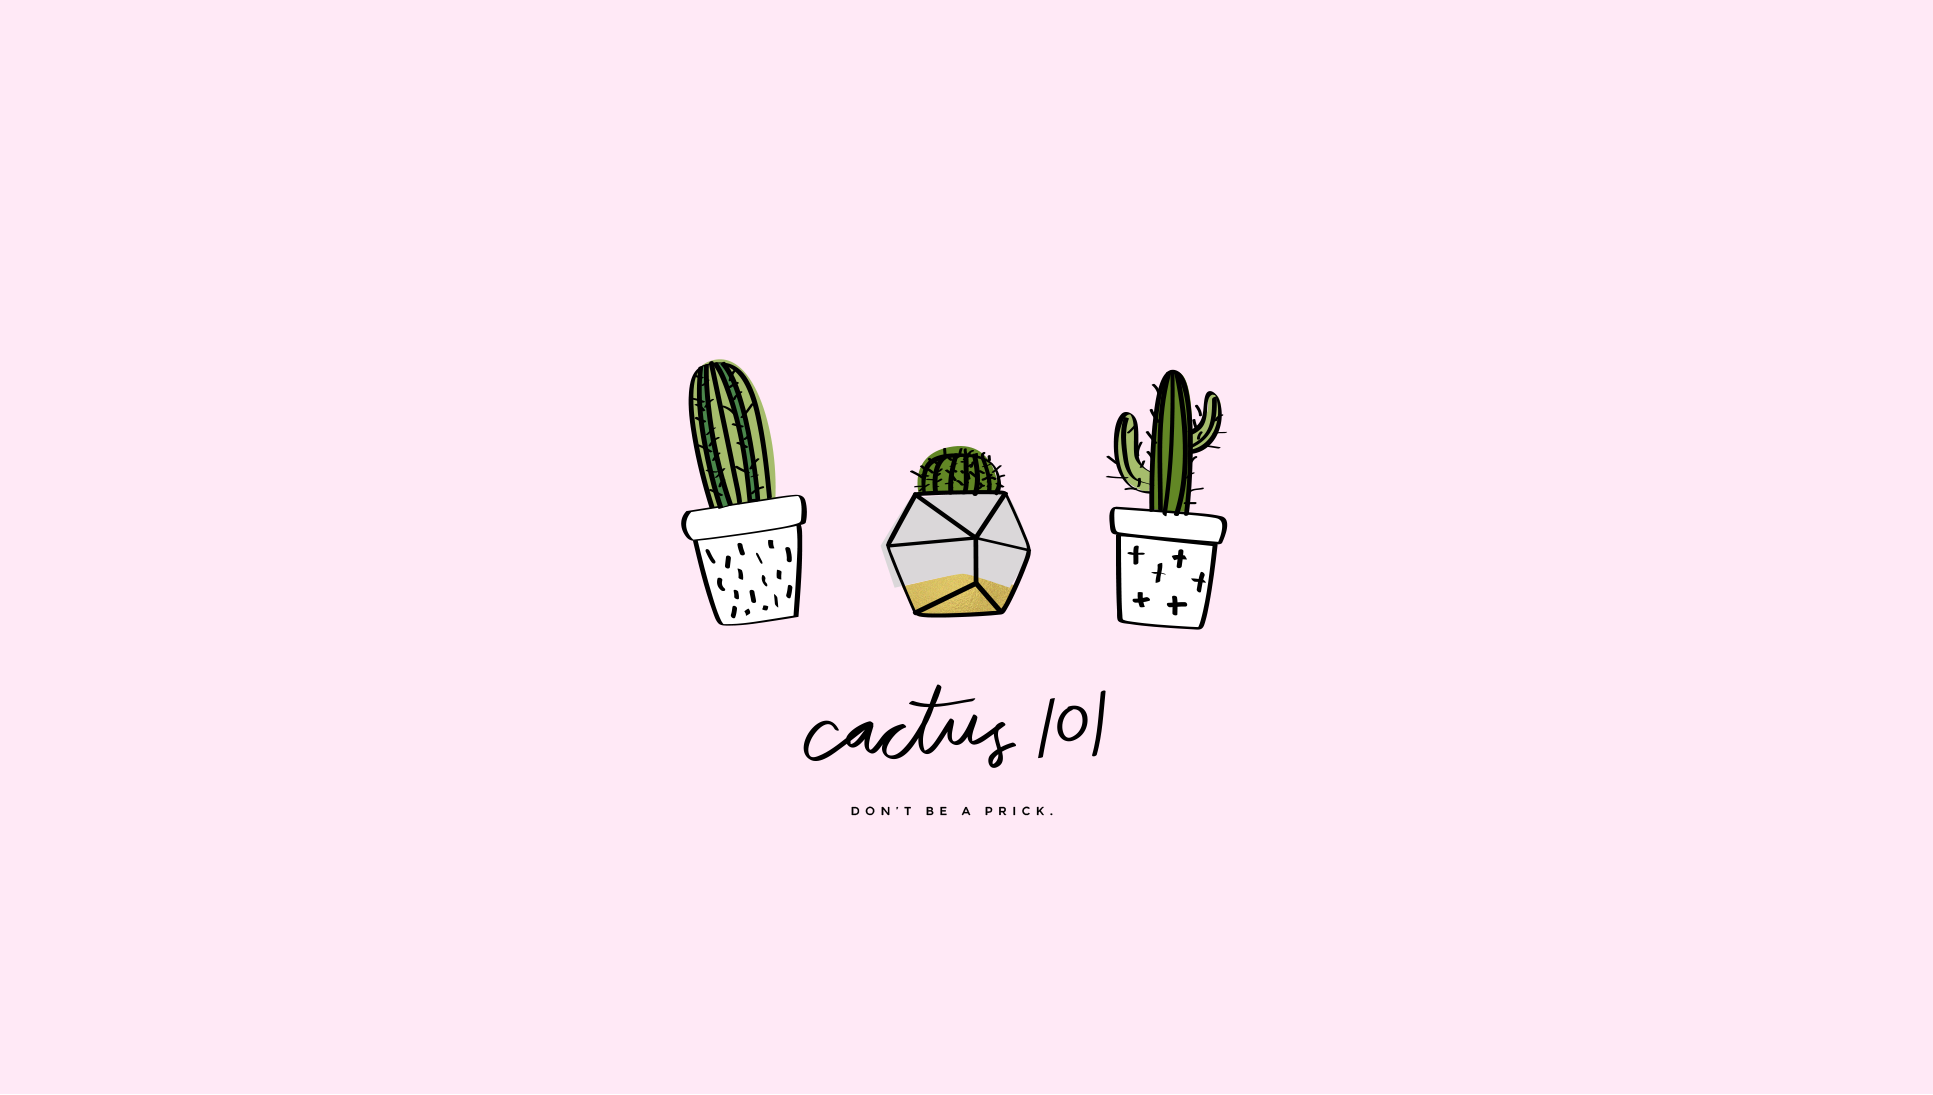 Download Cactus Wallpaper  Cute Backgr 101apk for Android  apkdlin